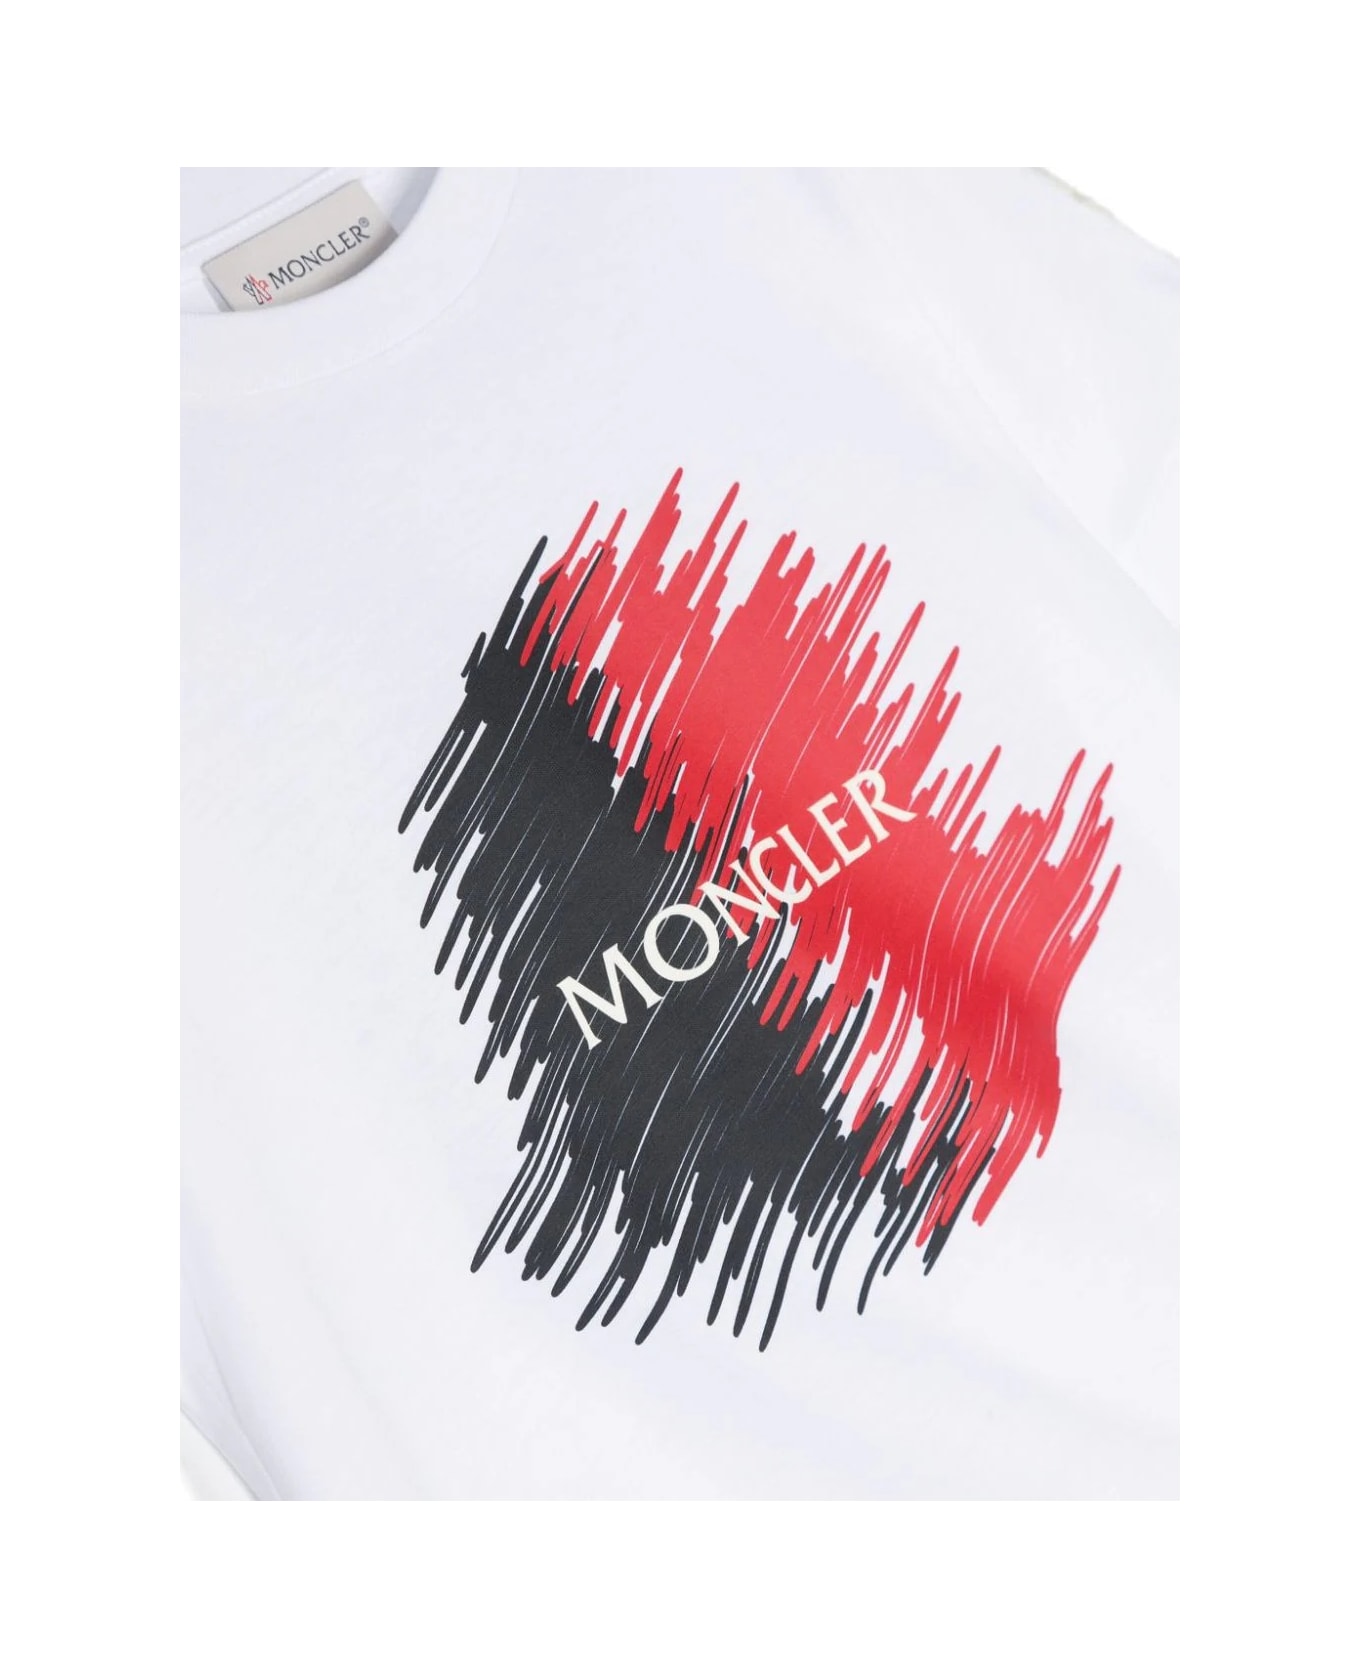 Moncler White T-shirt With Logo Motif - White